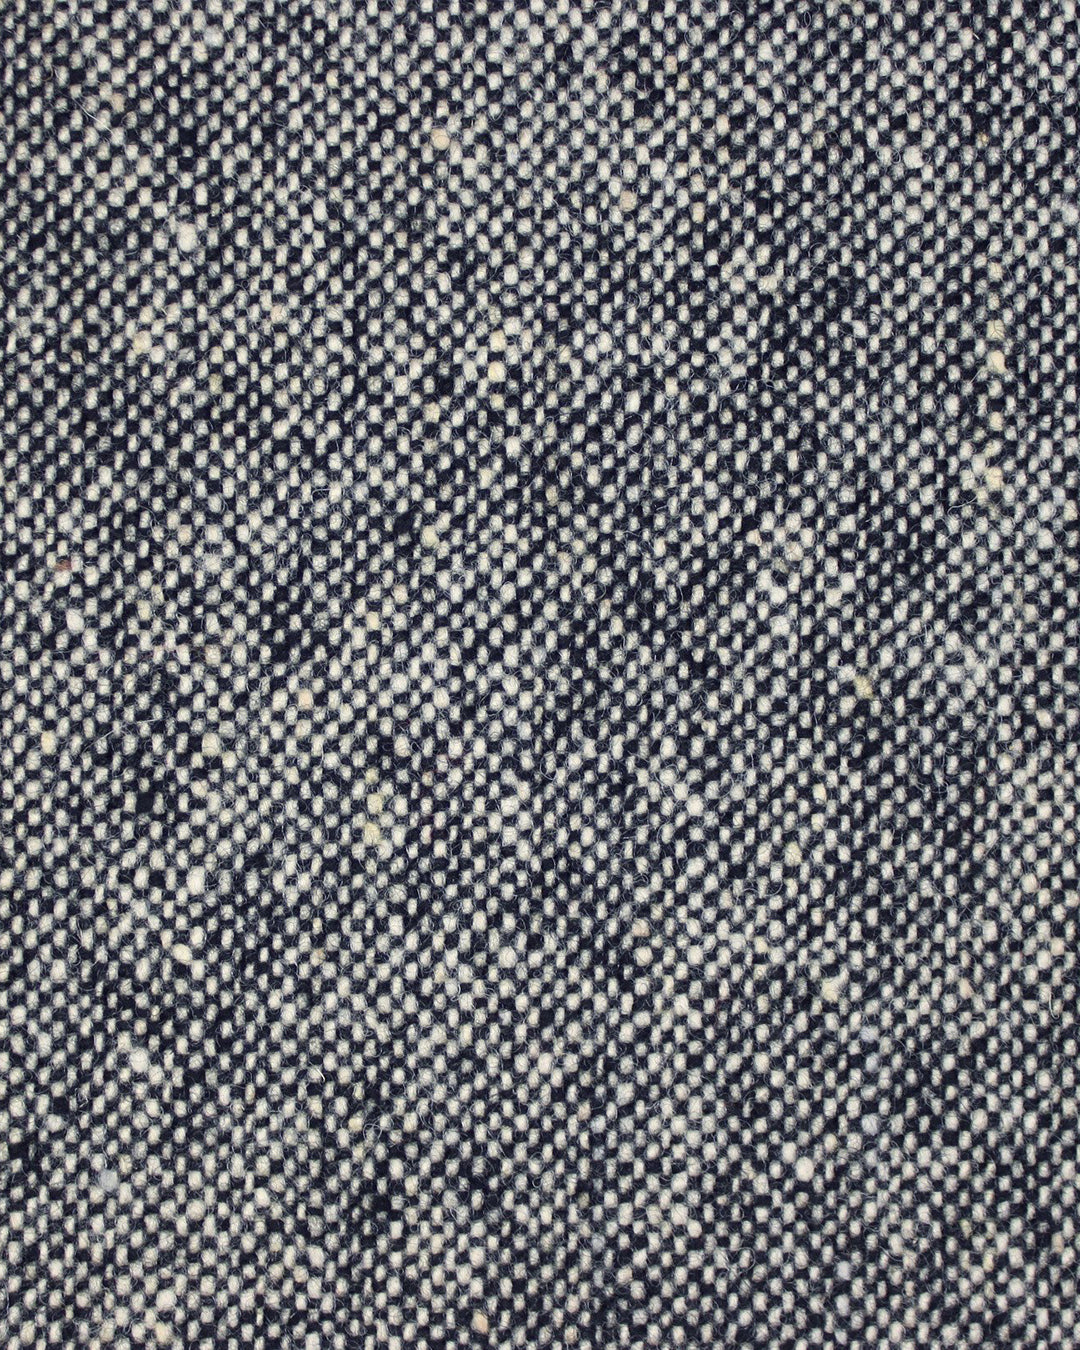 Molloy Plain Donegal Tweed Pants - Grey